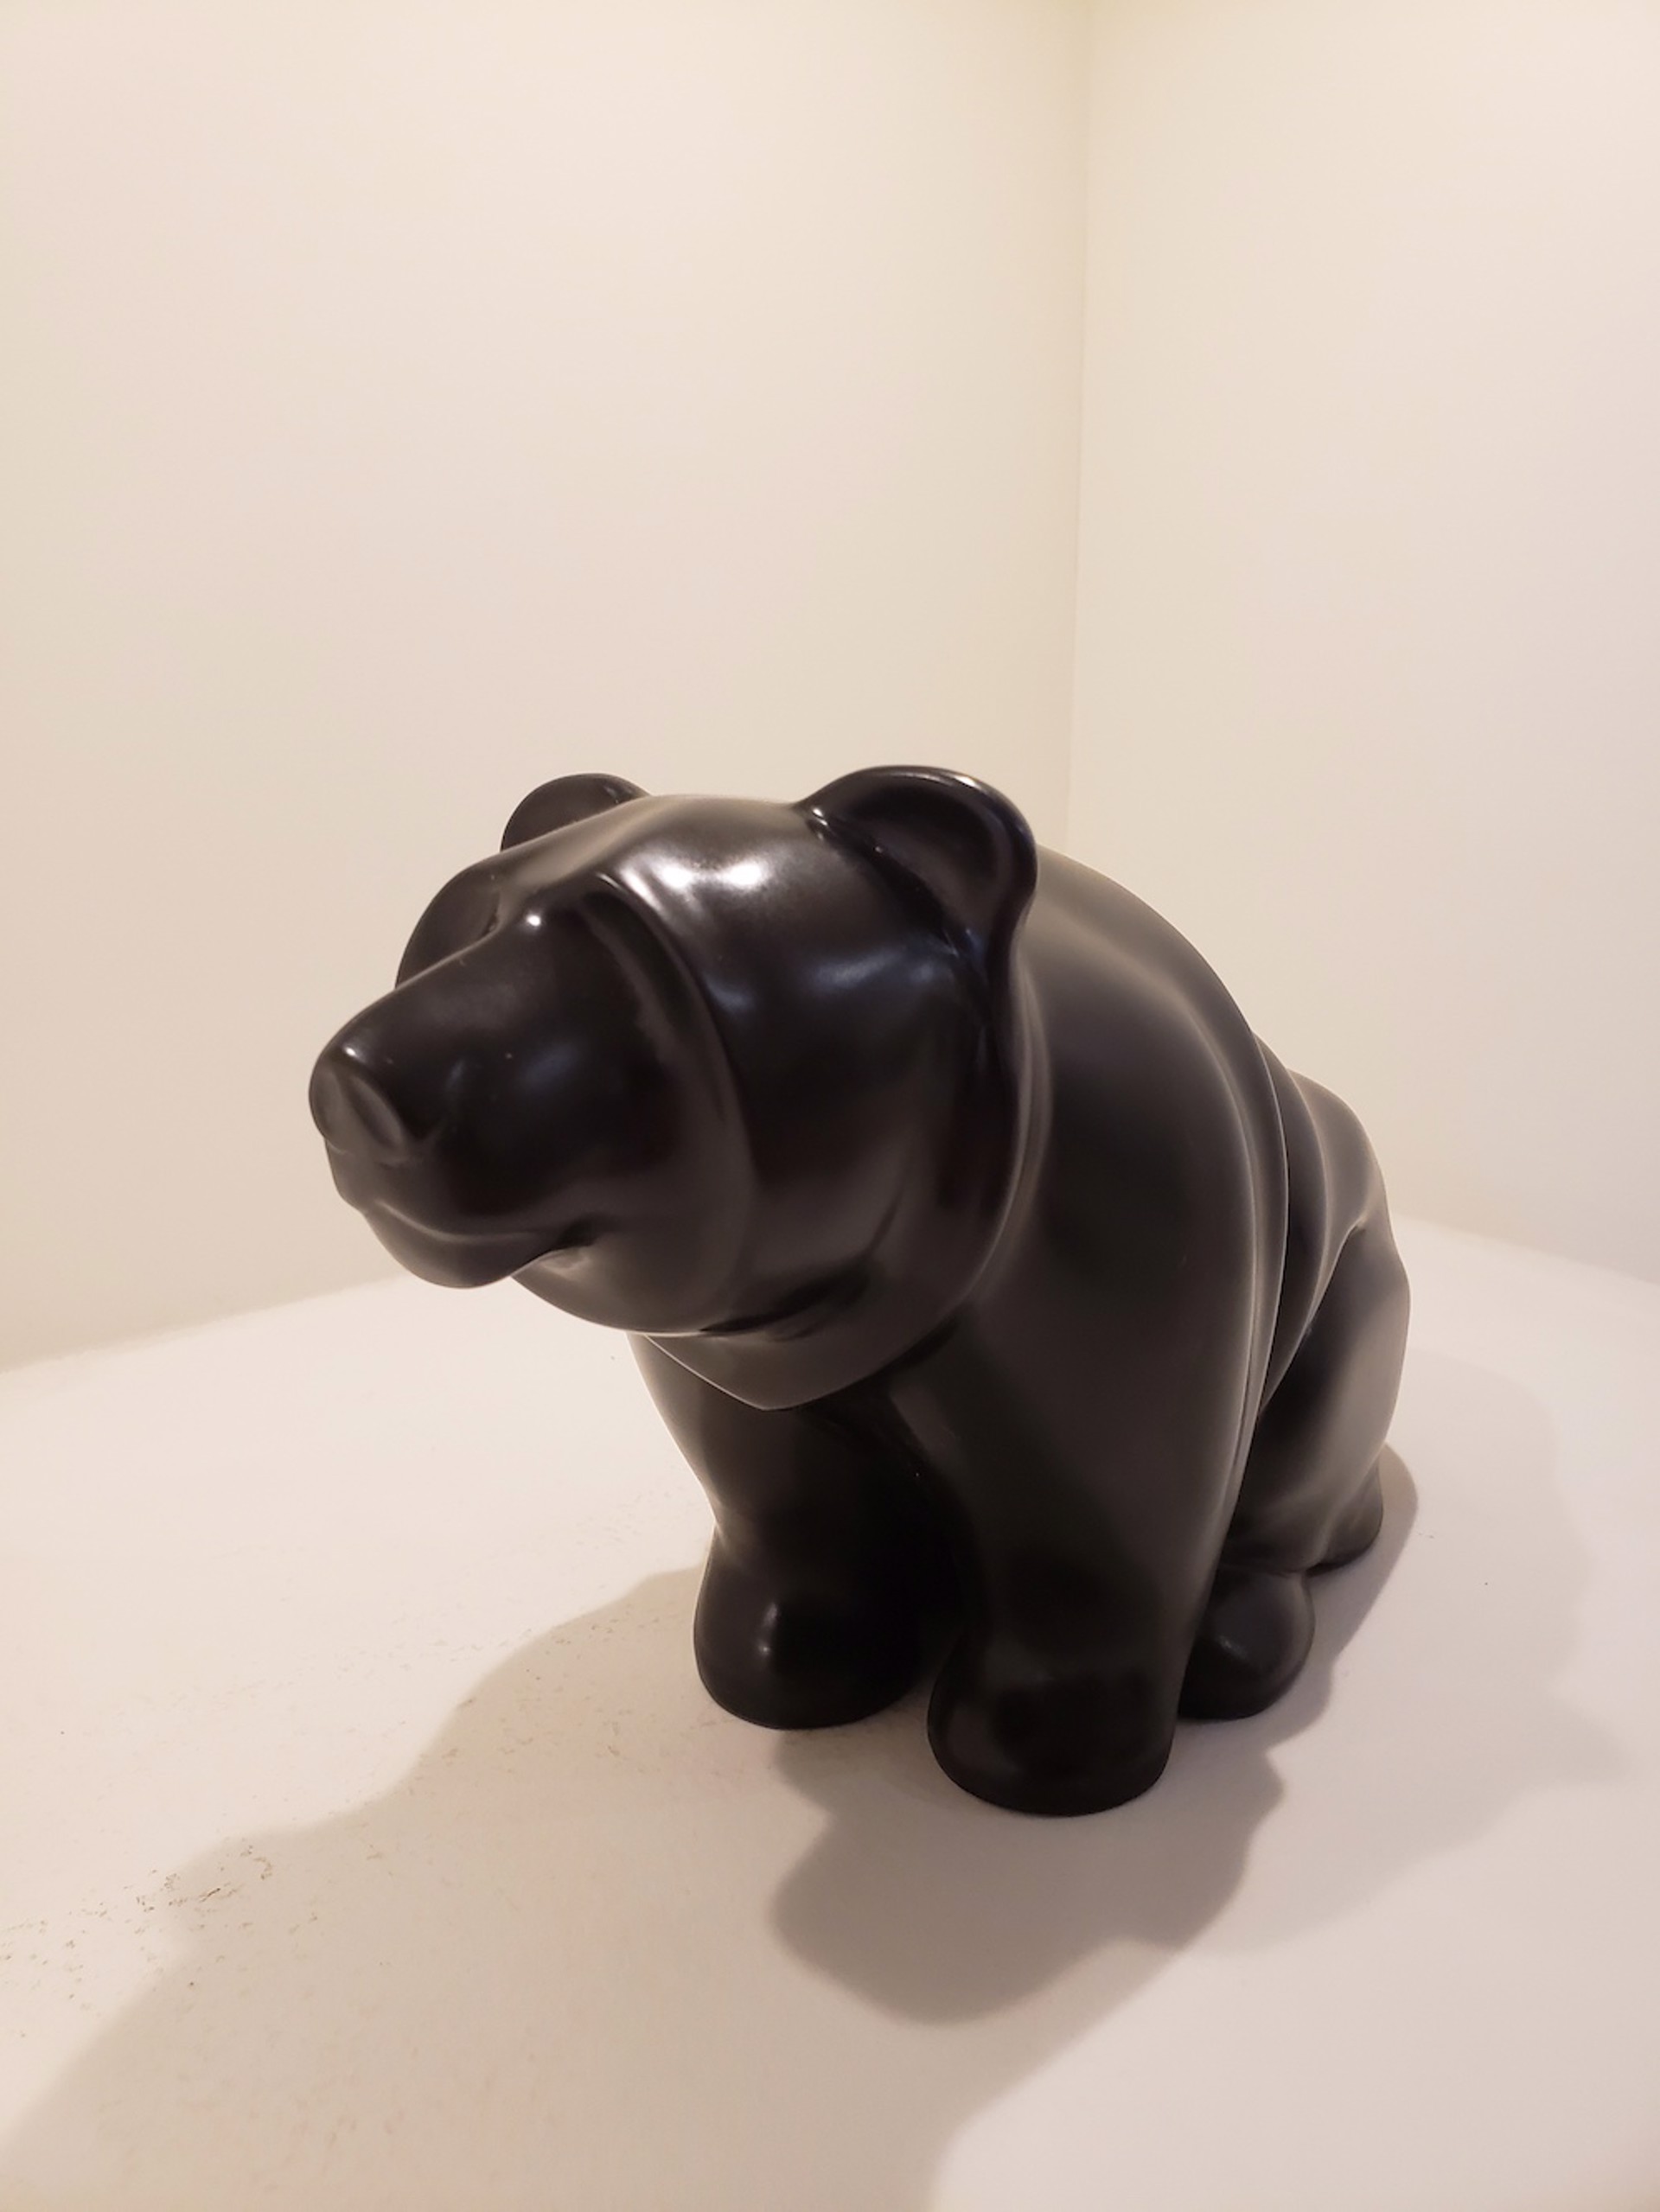 Bear #1 by Les Dunlop